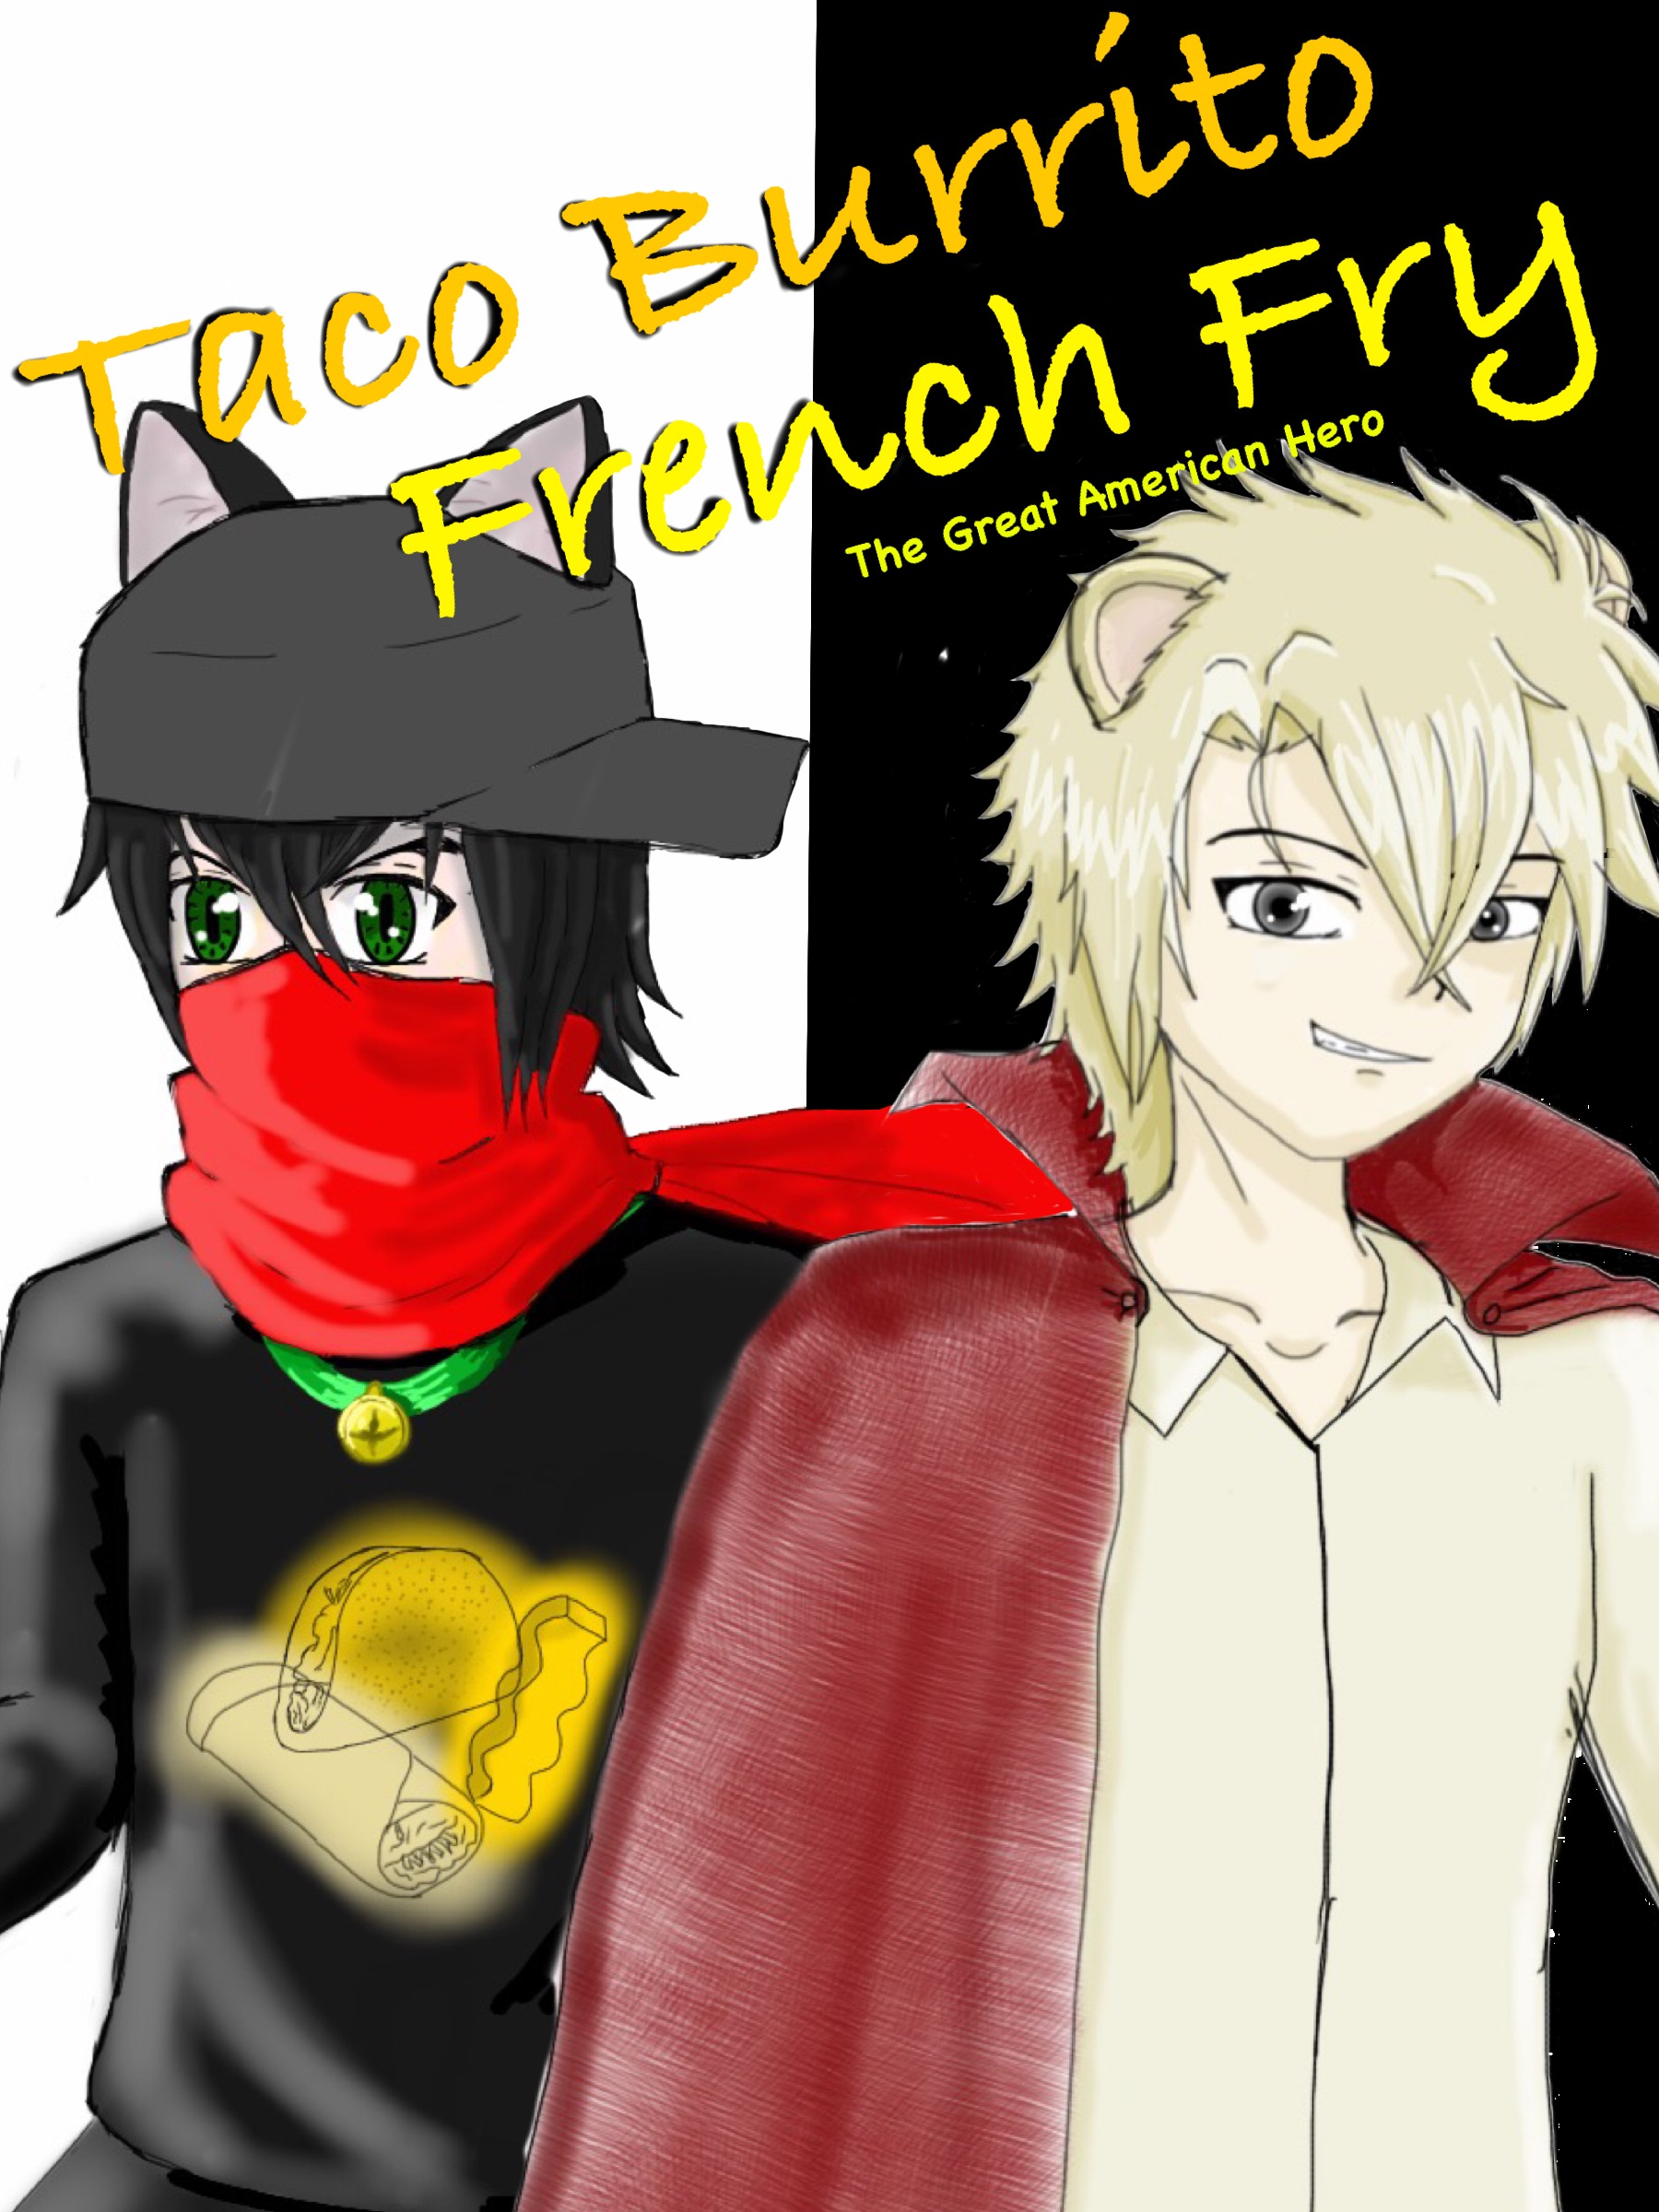 taco burrito french fry